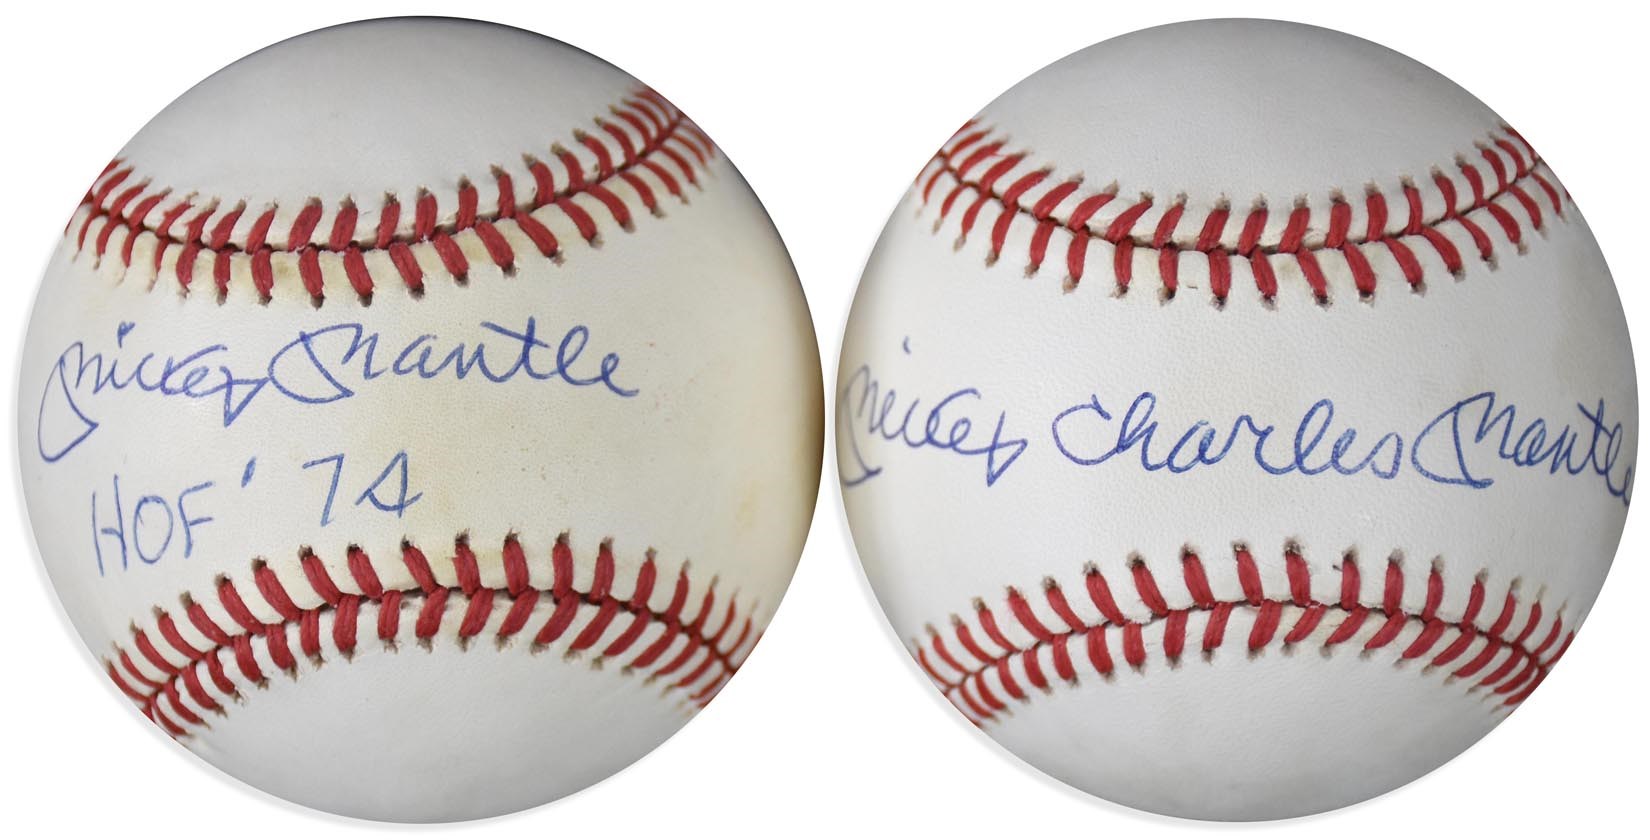 - Mickey "Charles" Mantle and "HOF 1974" Signed Baseballs (2)